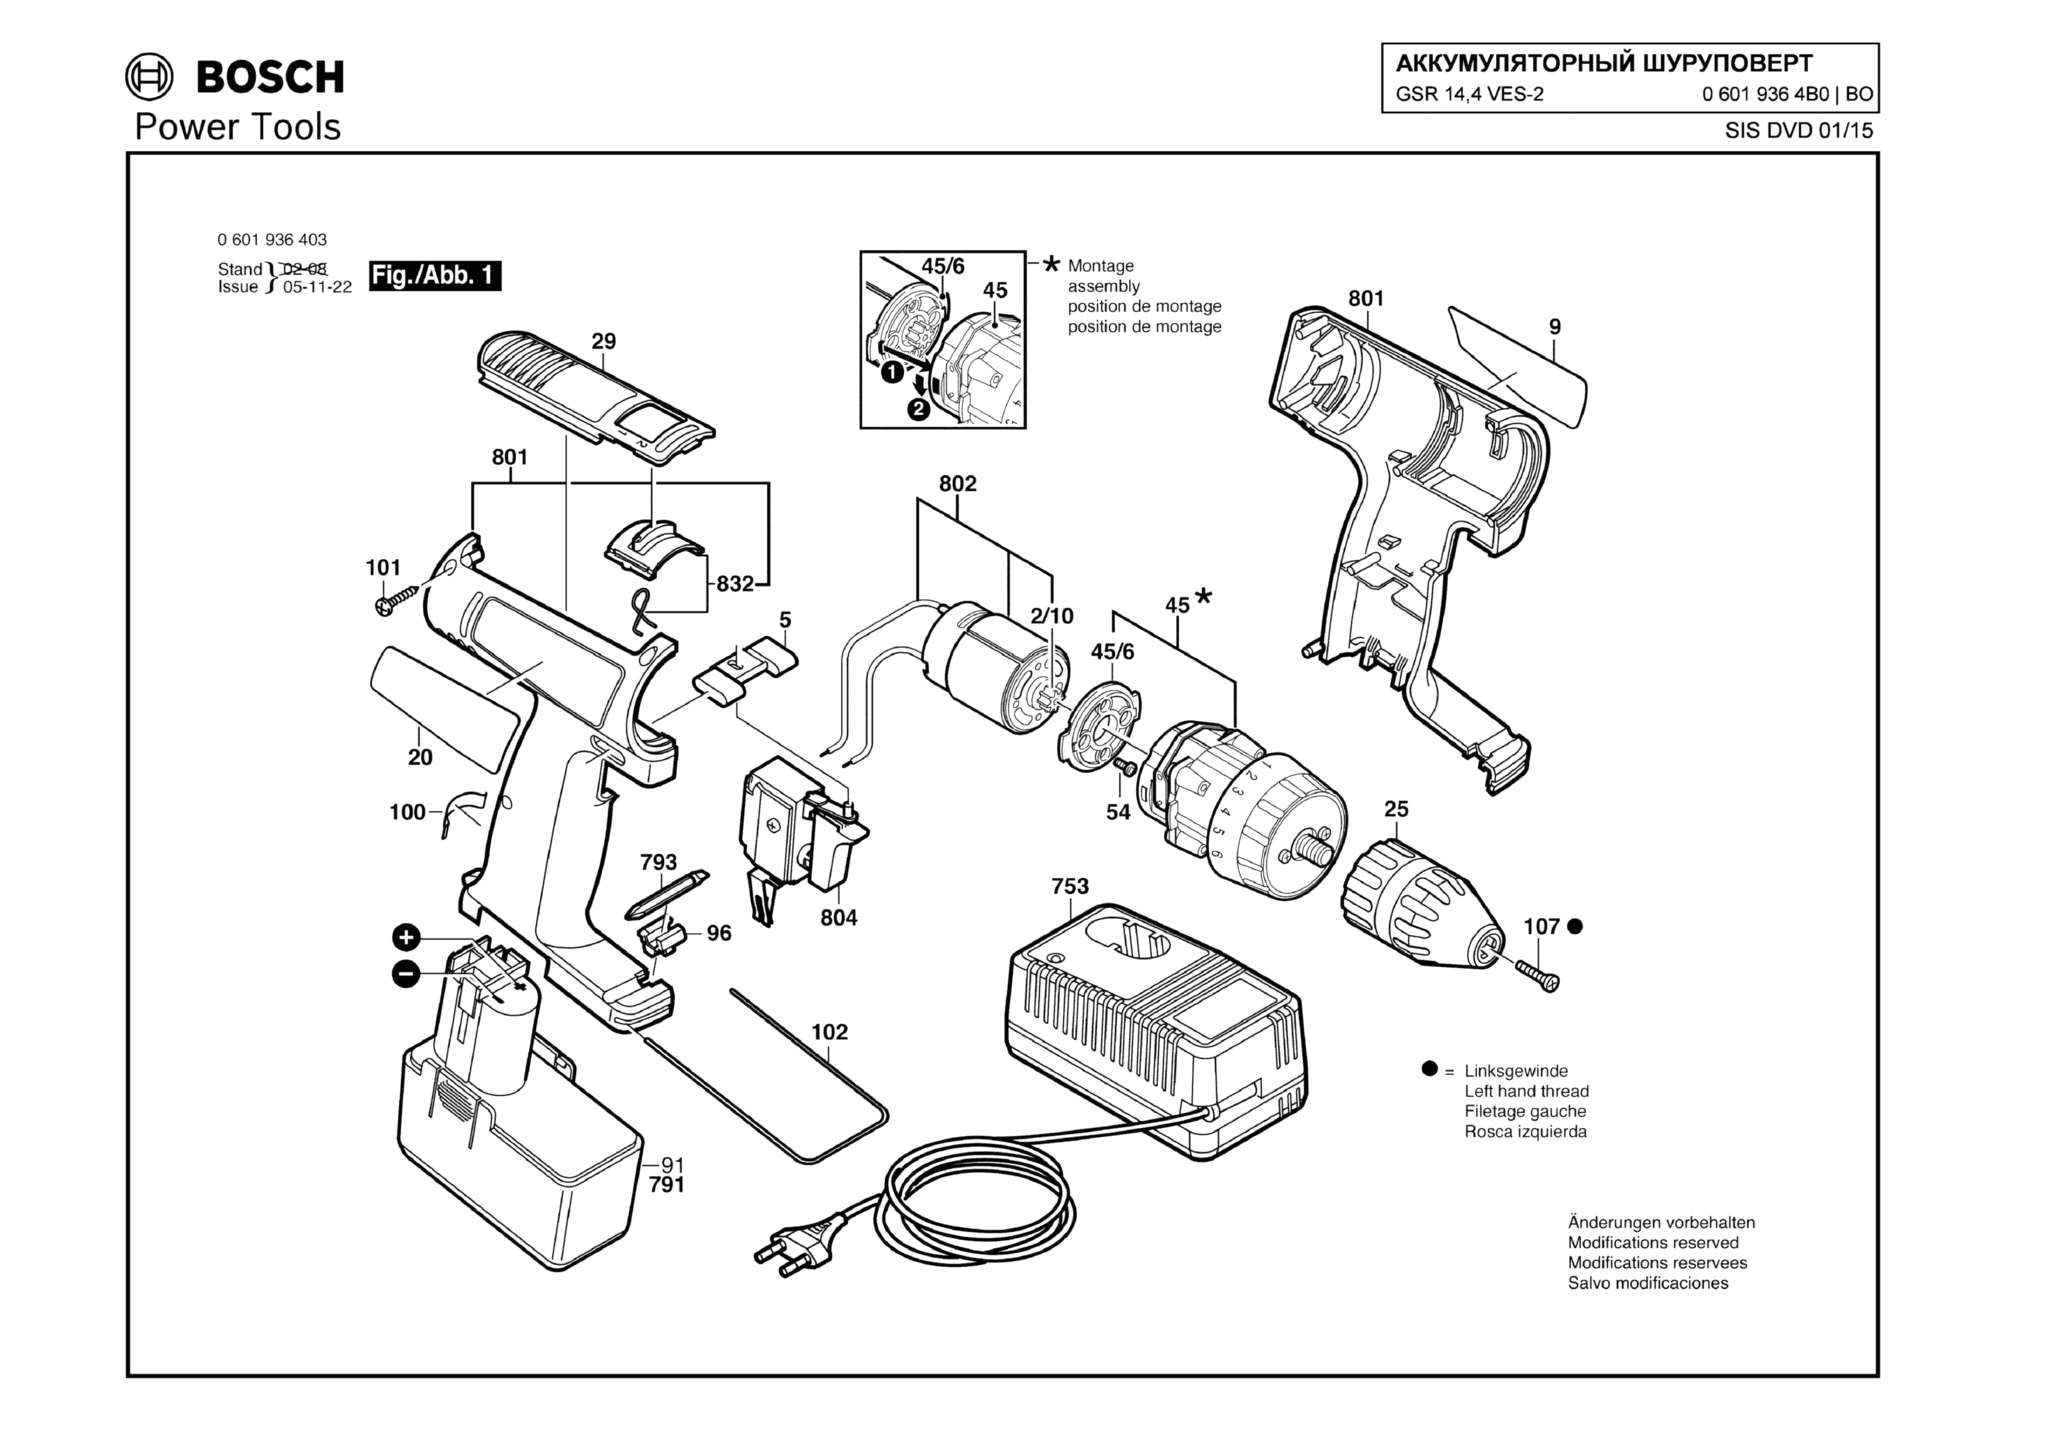 Запчасти, схема и деталировка Bosch GSR 14,4 VES-2 (ТИП 06019364B0)